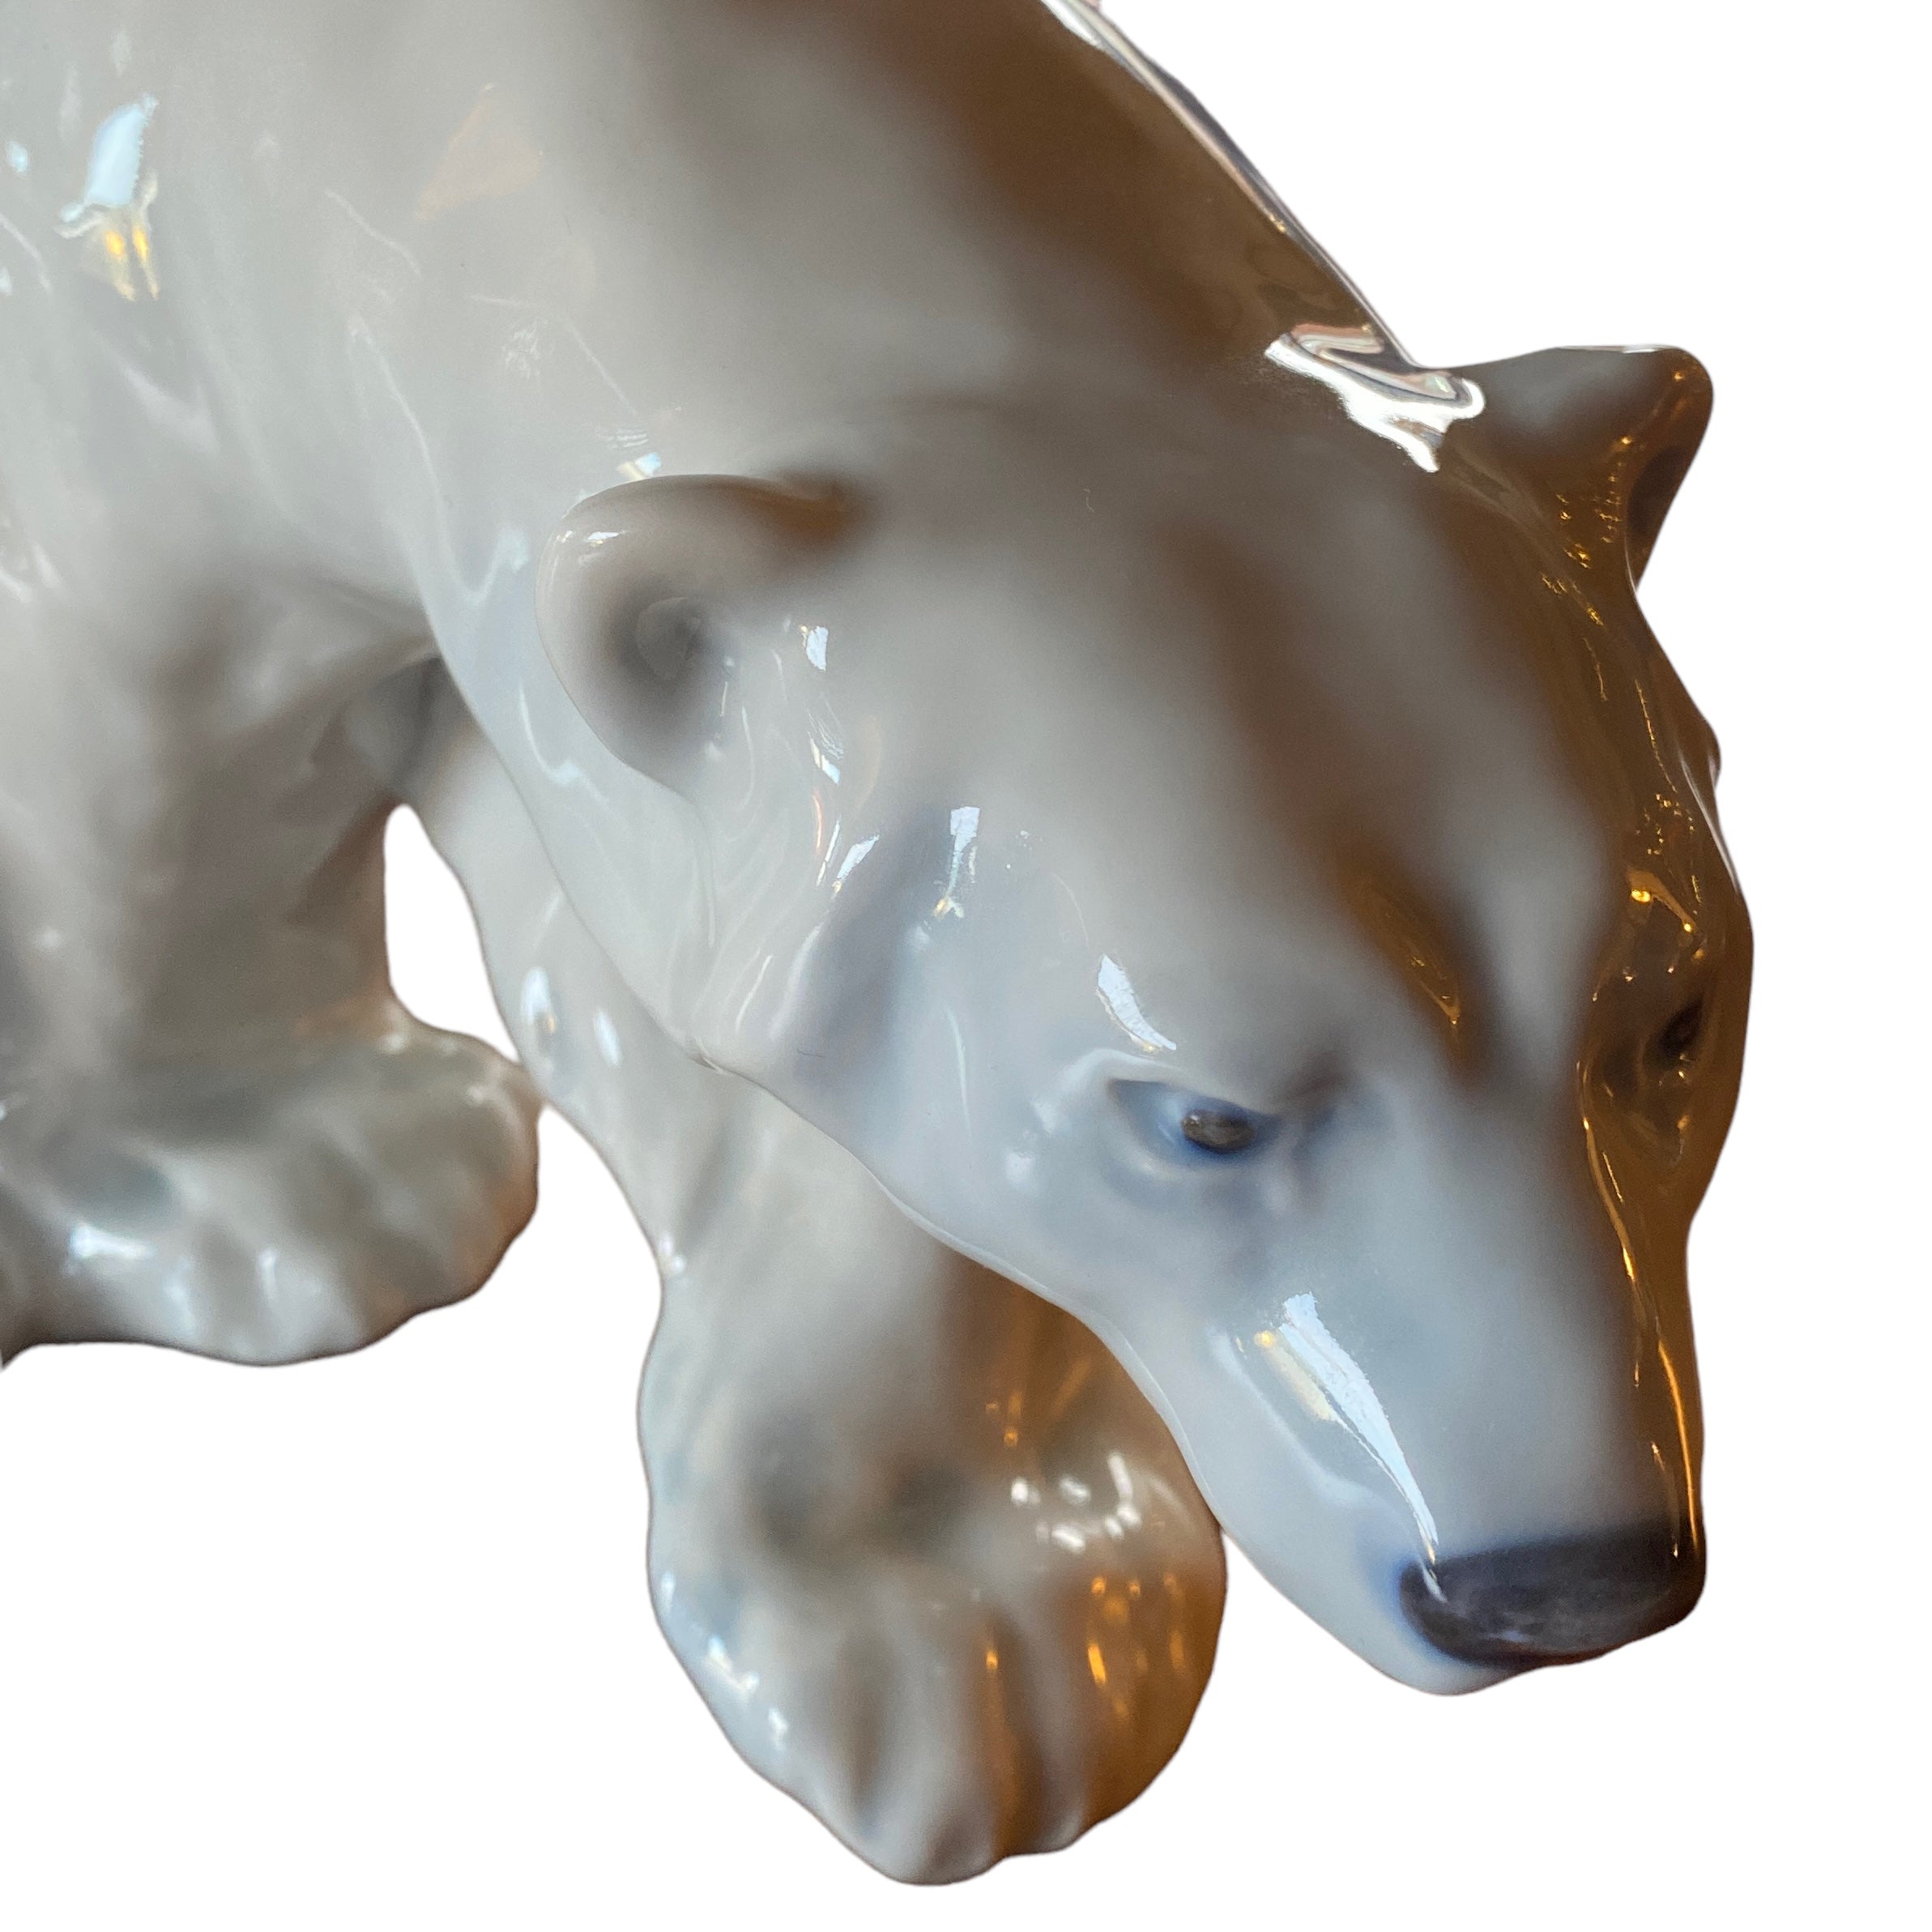 Head Of Polar Bear On The Prowl Royal Copenhagen figurine 1137